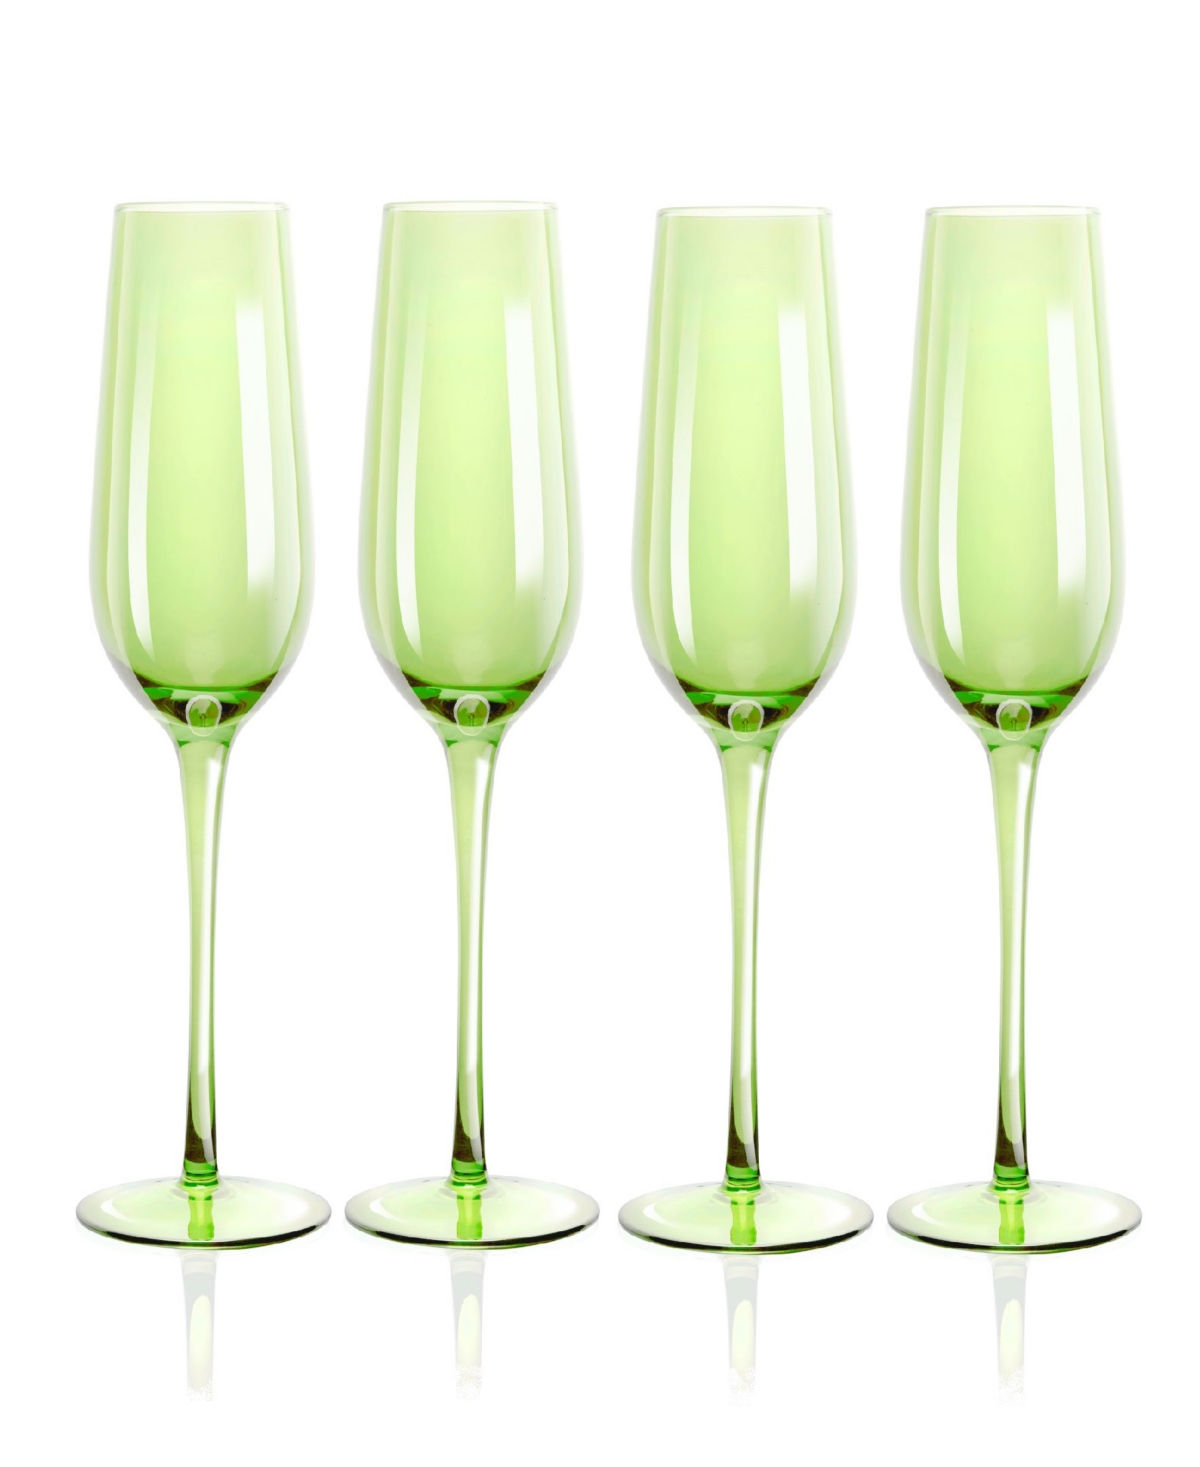 Qualia Glass Carnival Champagne Flute 9 oz Glasses, Set Of 4 In Green